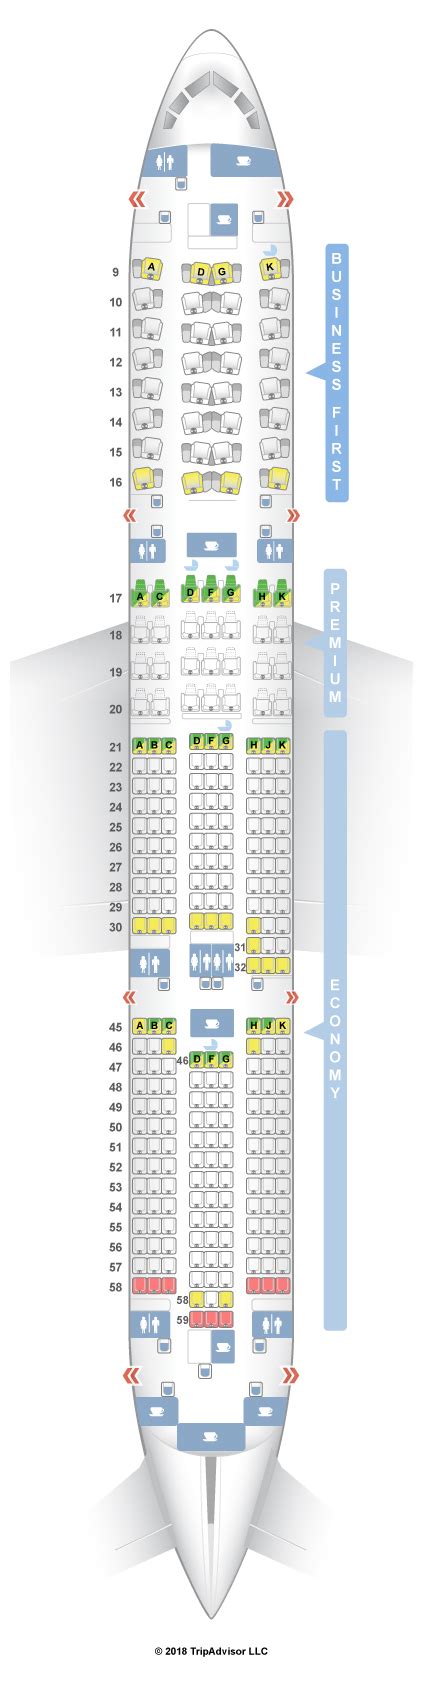 Seatguru Seat Map El Al Boeing 787 9 789 Seatguru